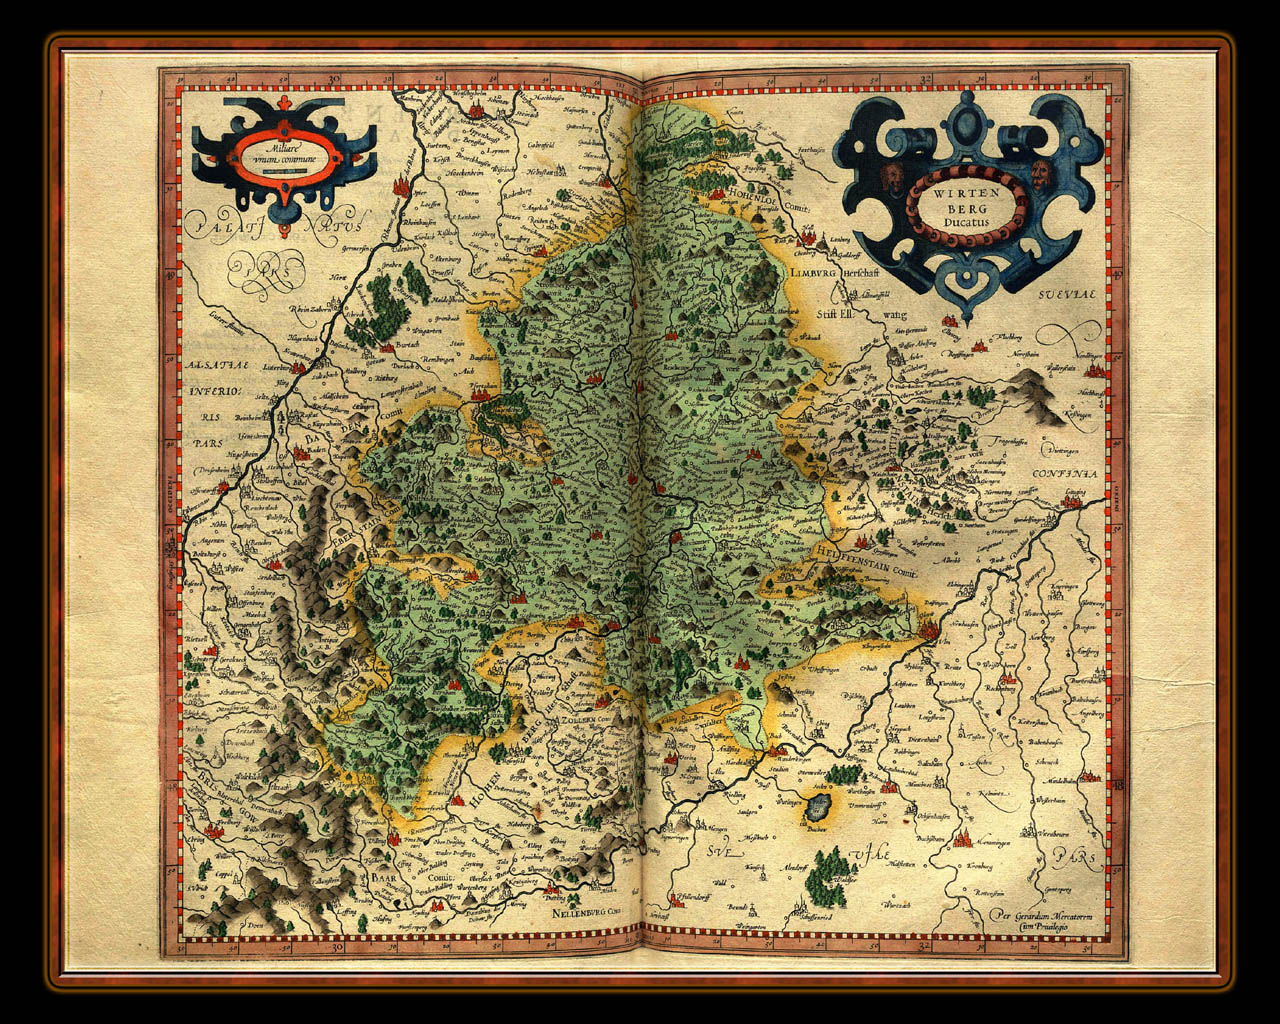 "Gerhard Mercator 1595 World Atlas - Cosmographicae" - Wallpaper No. 40 of 106. Right click for saving options.